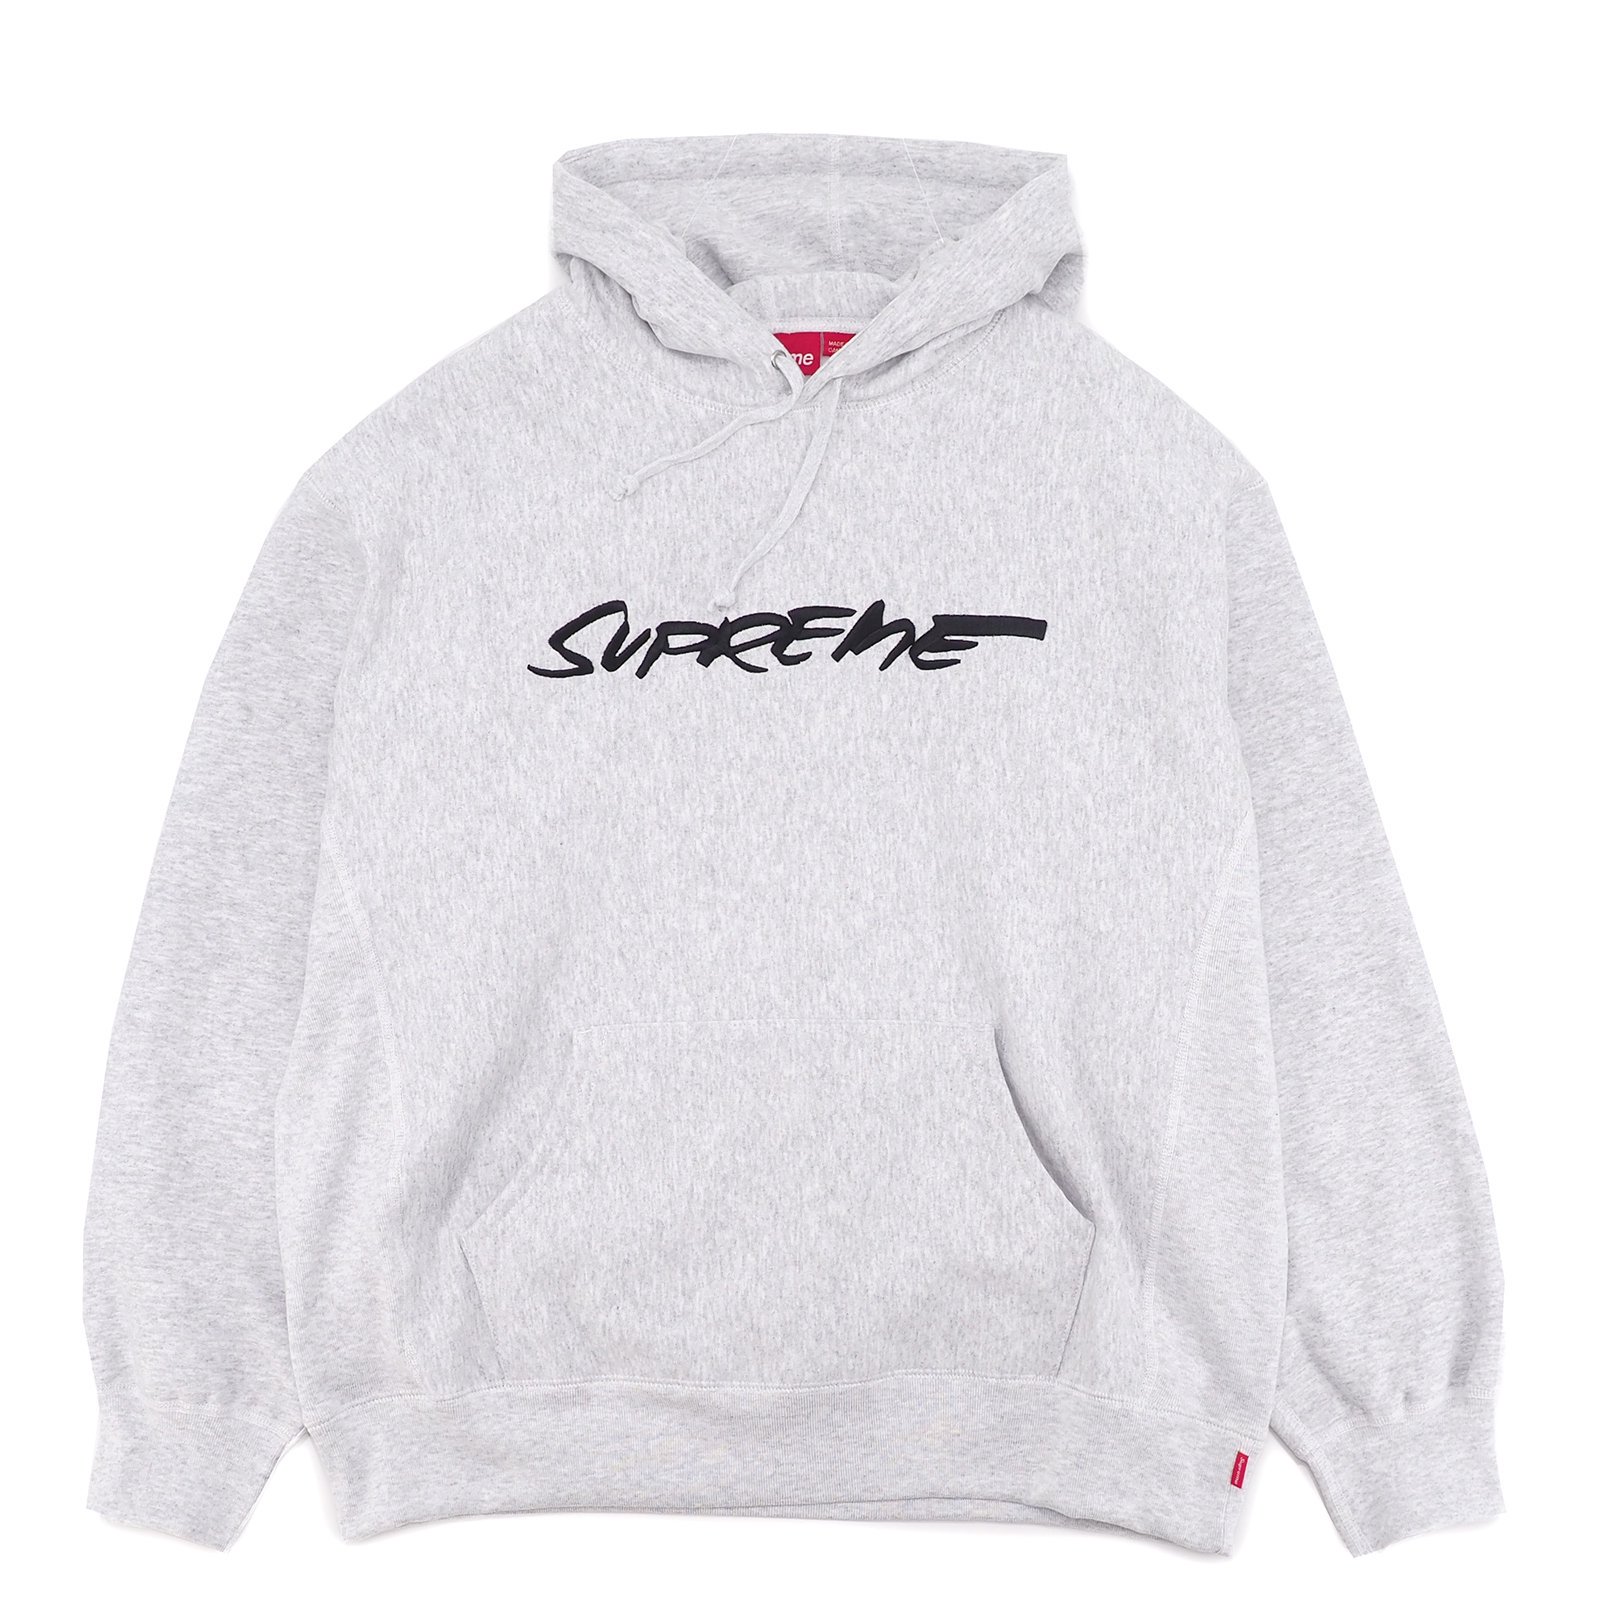 Supreme - Futura Hooded Sweatshirt - ParkSIDER